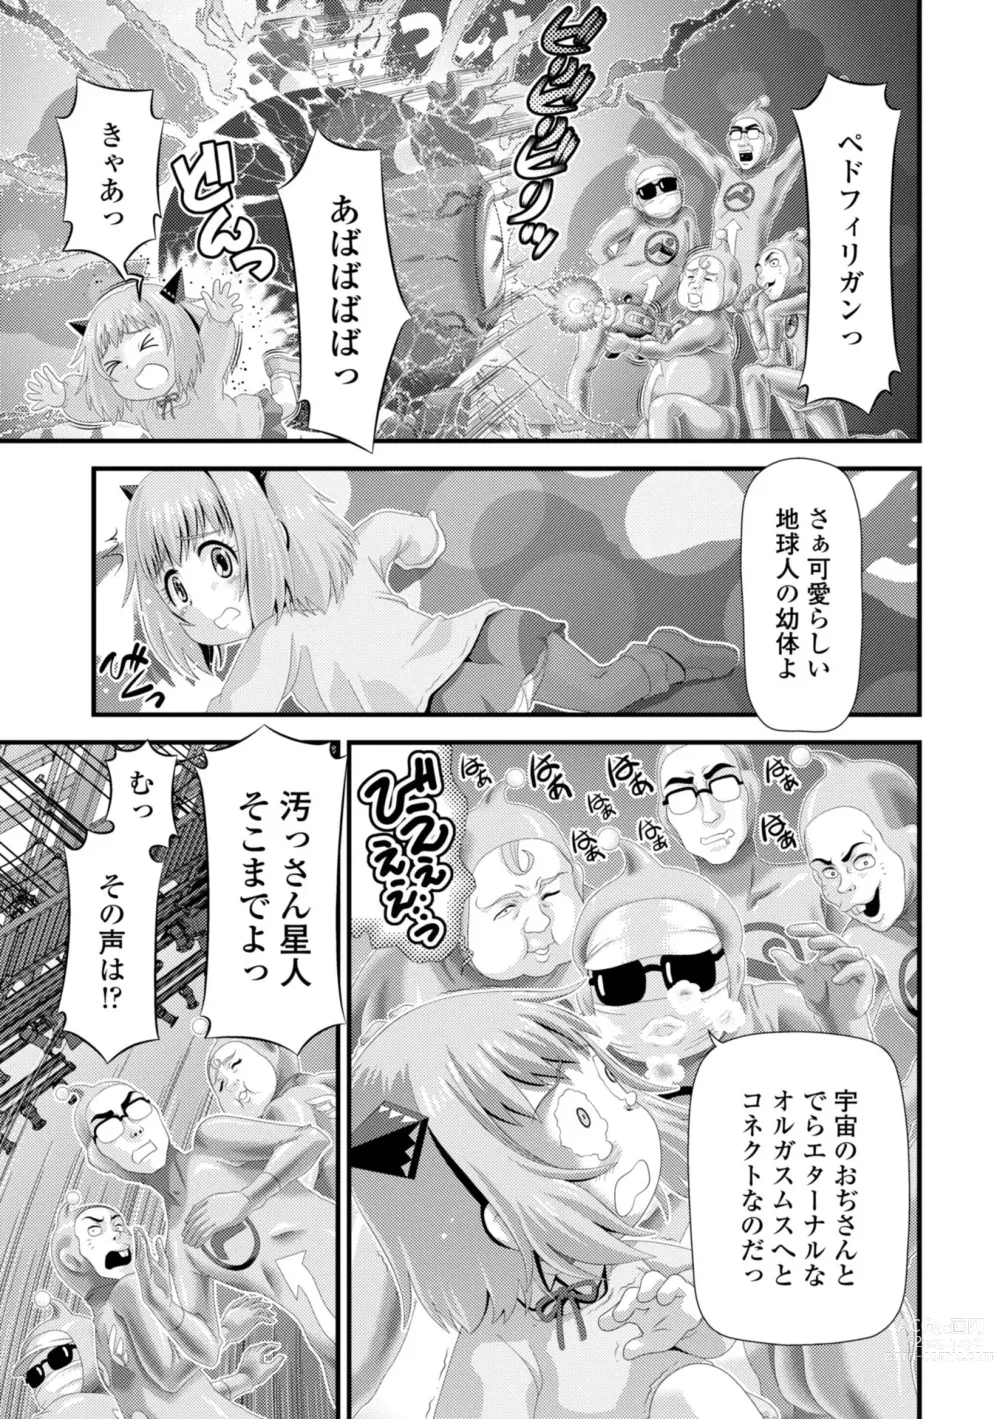 Page 5 of manga minimum material 1